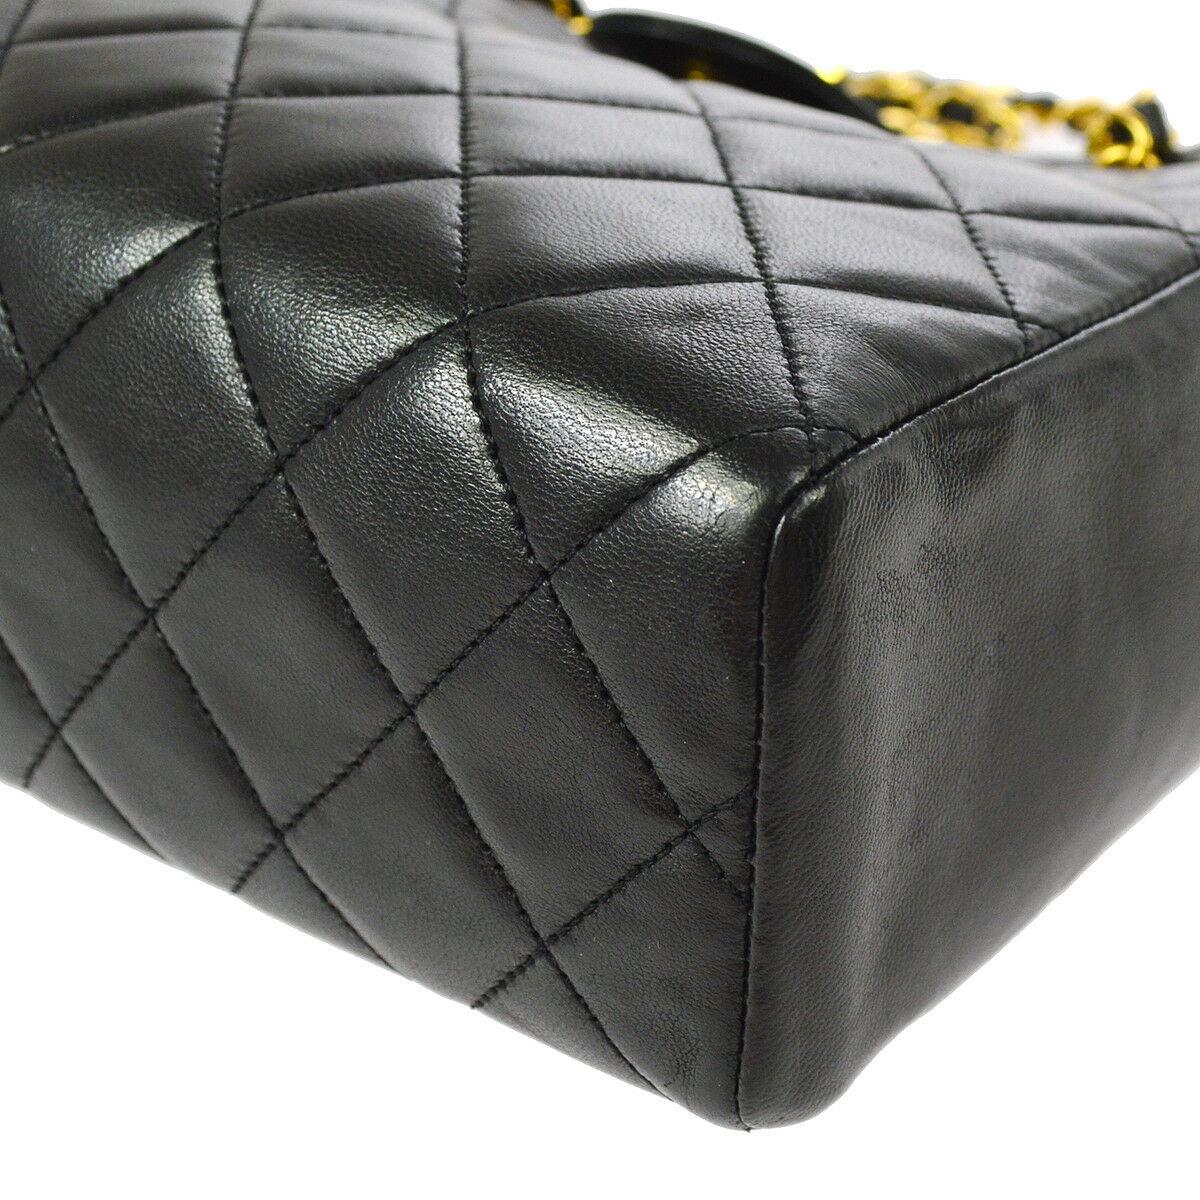 Chanel Black Leather Gold Small Carryall Shoulder Shopper Tote Bag 1